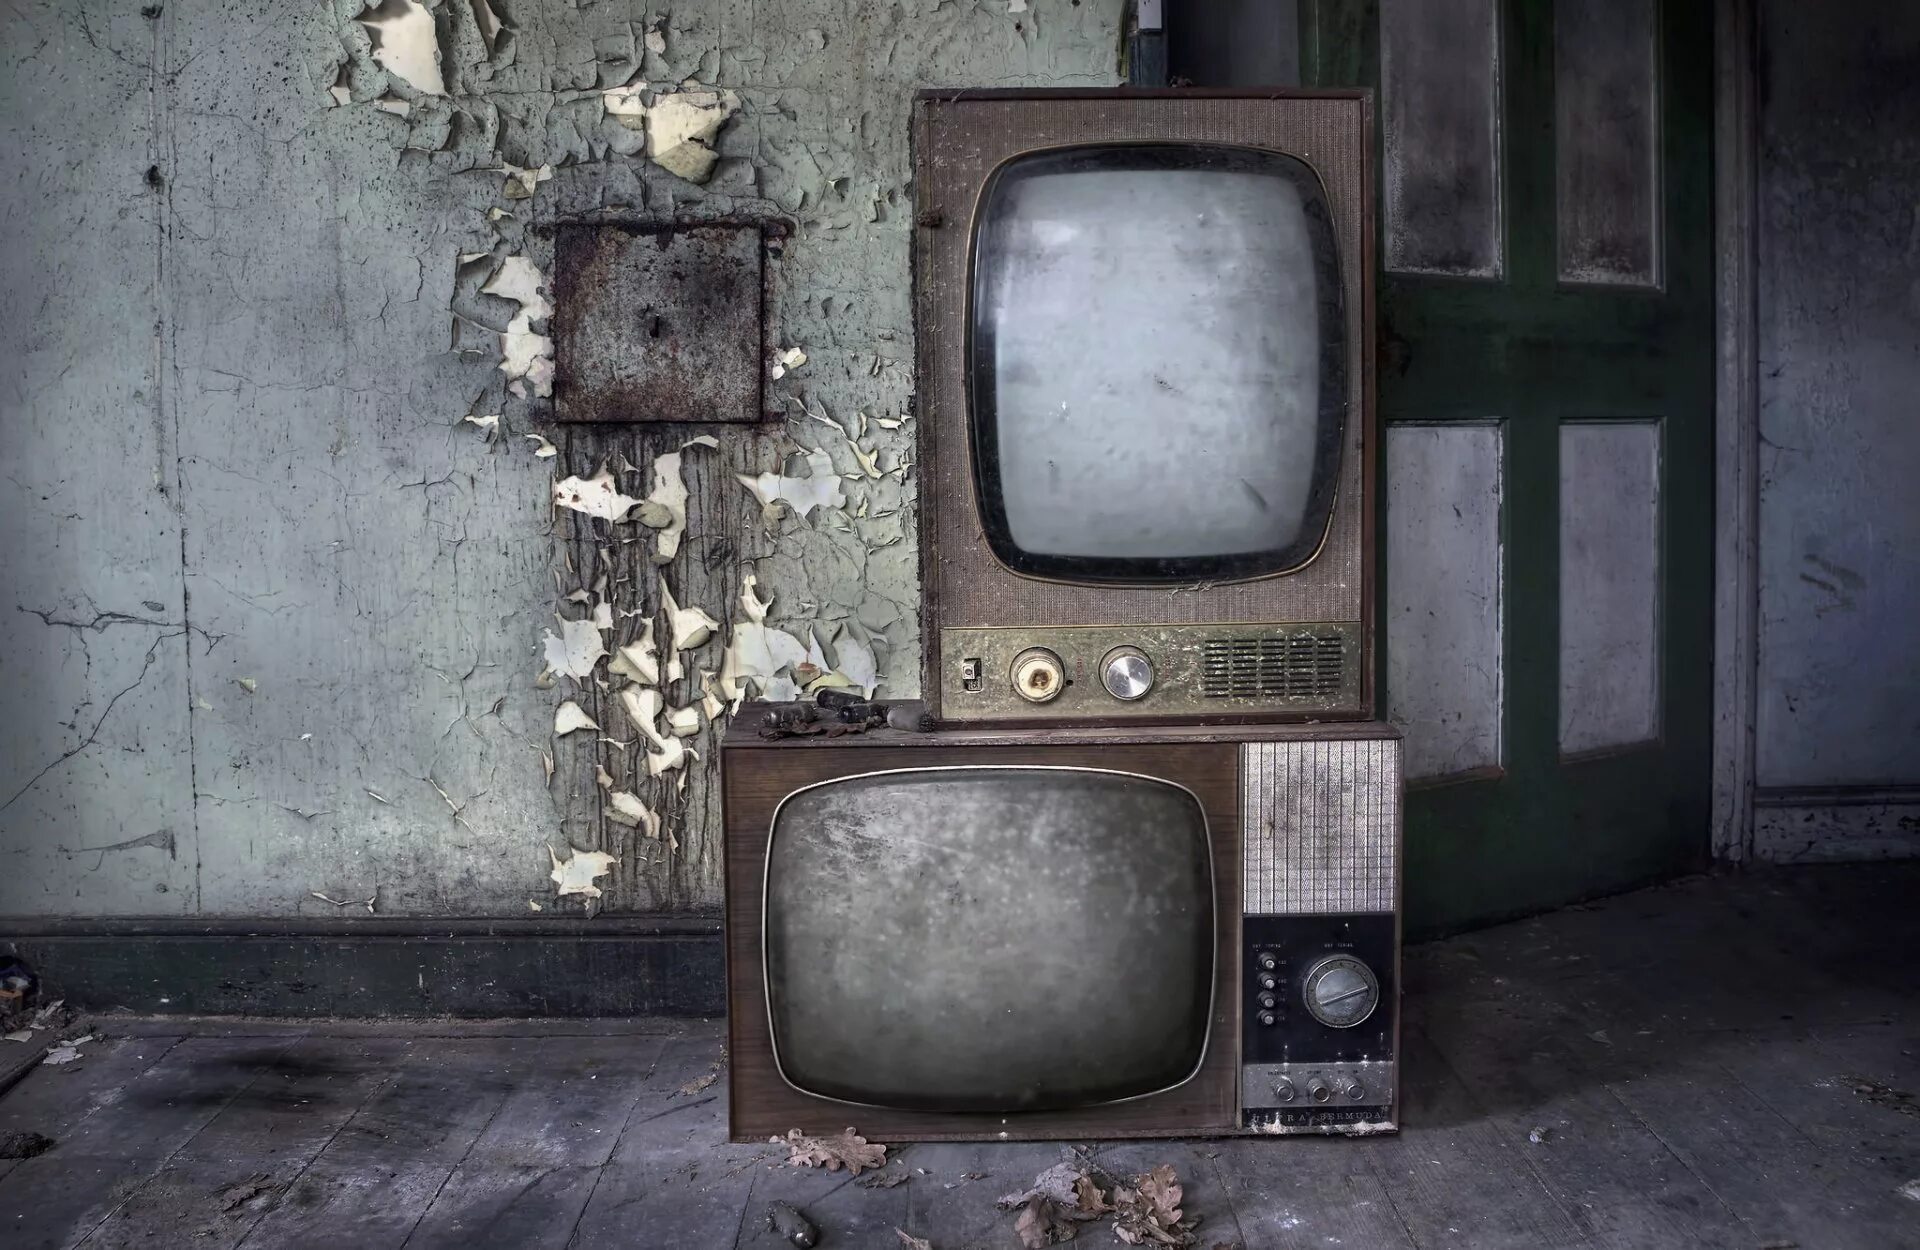 Tv old 2. Старый телевизор. Старинный телевизор. Старый телевизор в интерьере. Старый поломанный телевизор.